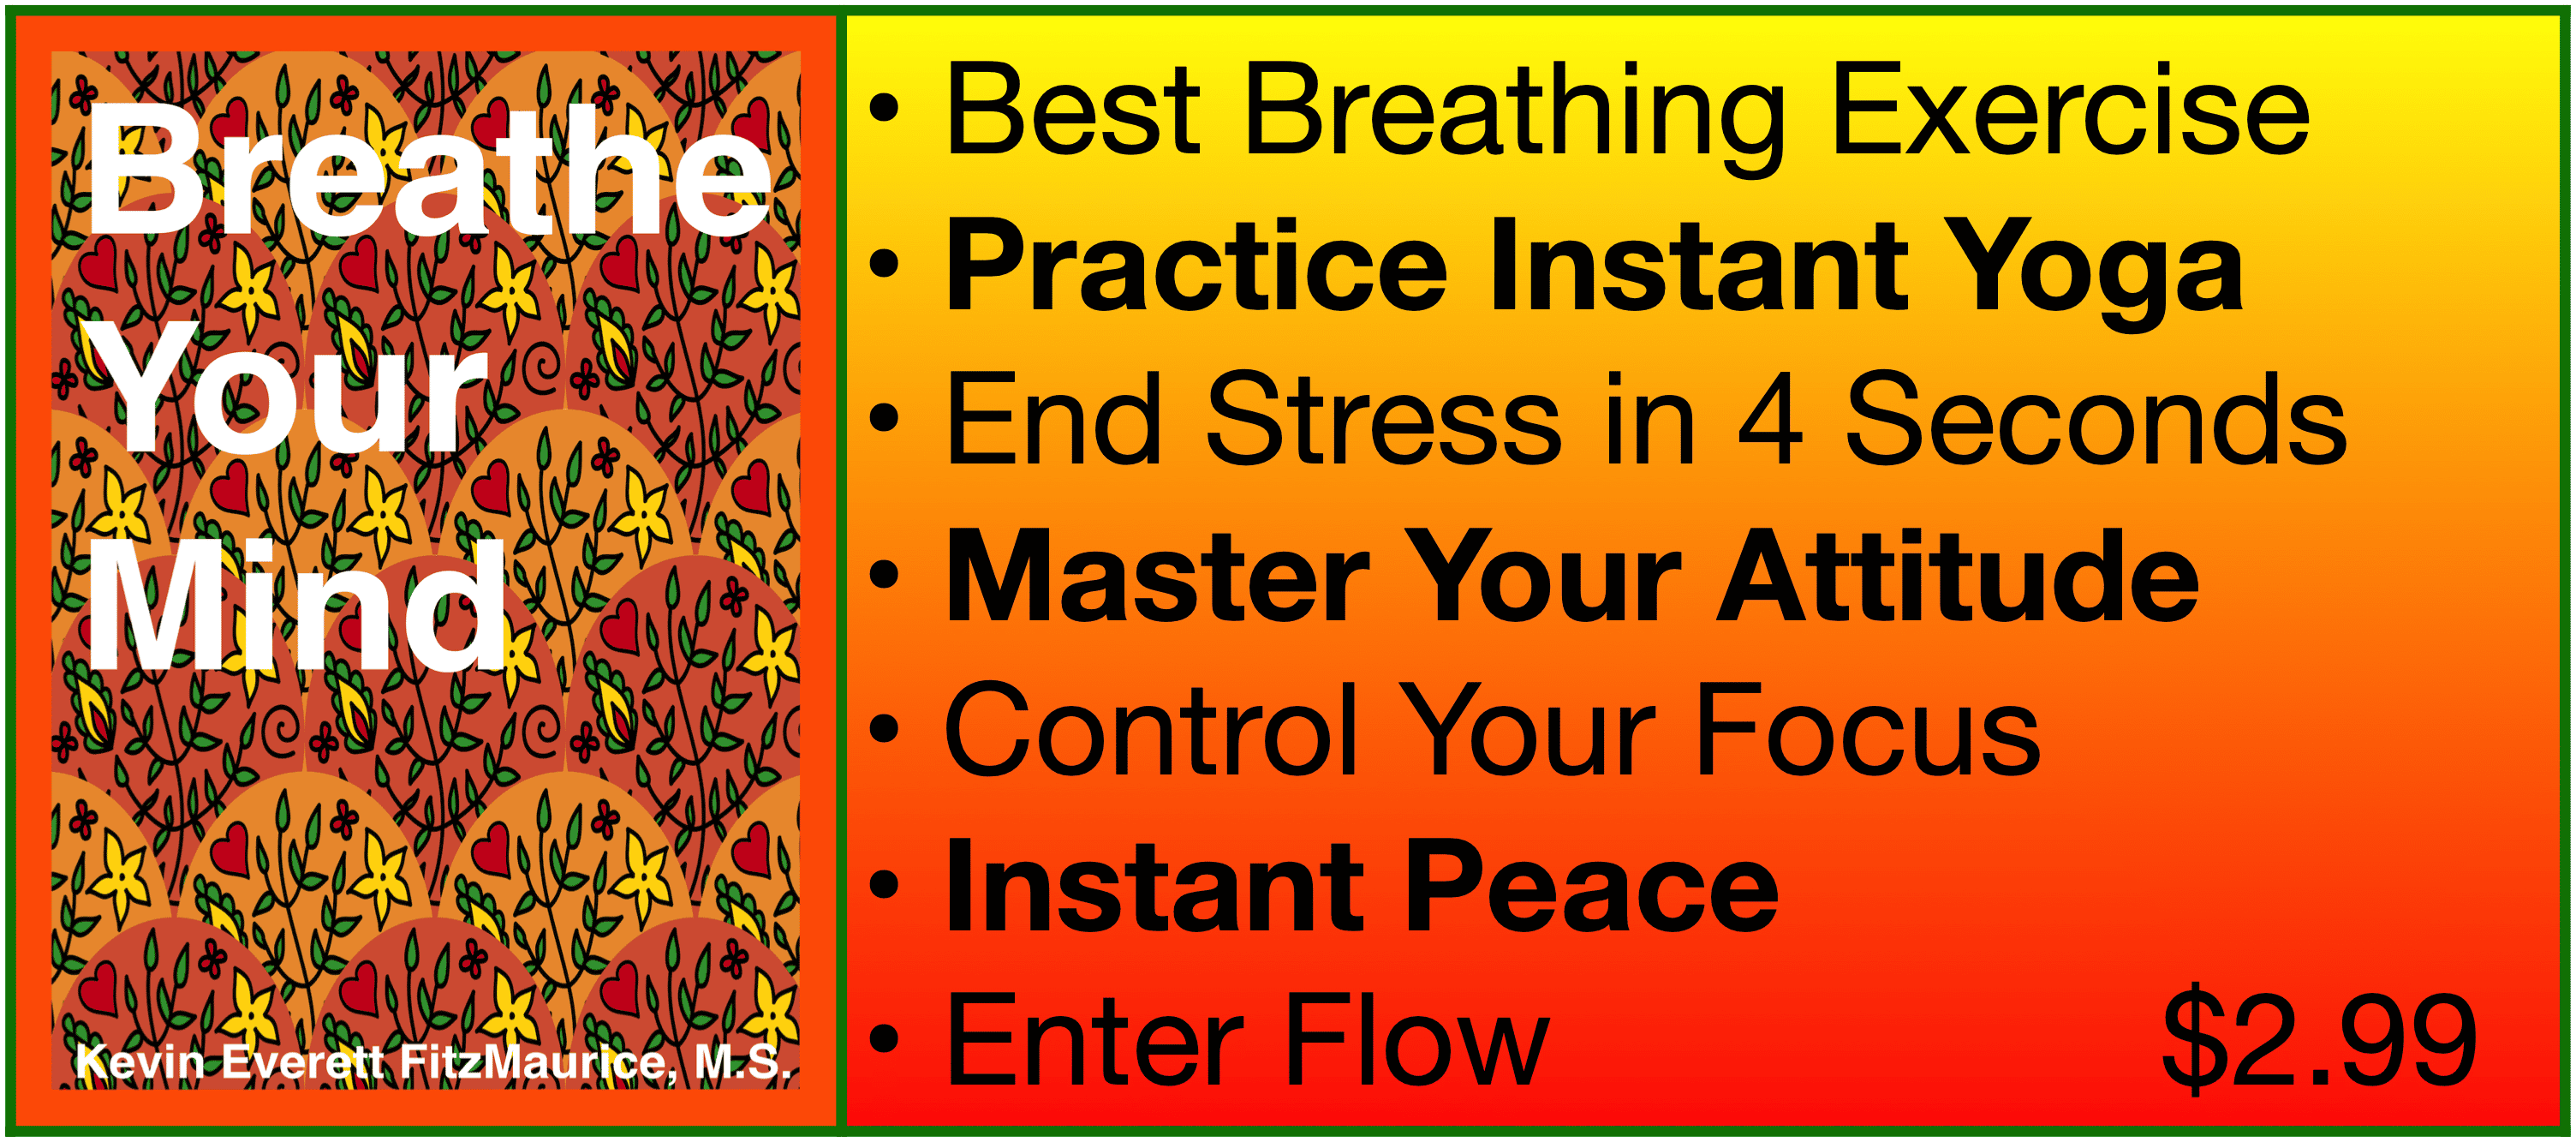 Breathe for the Best Breathing Exercise